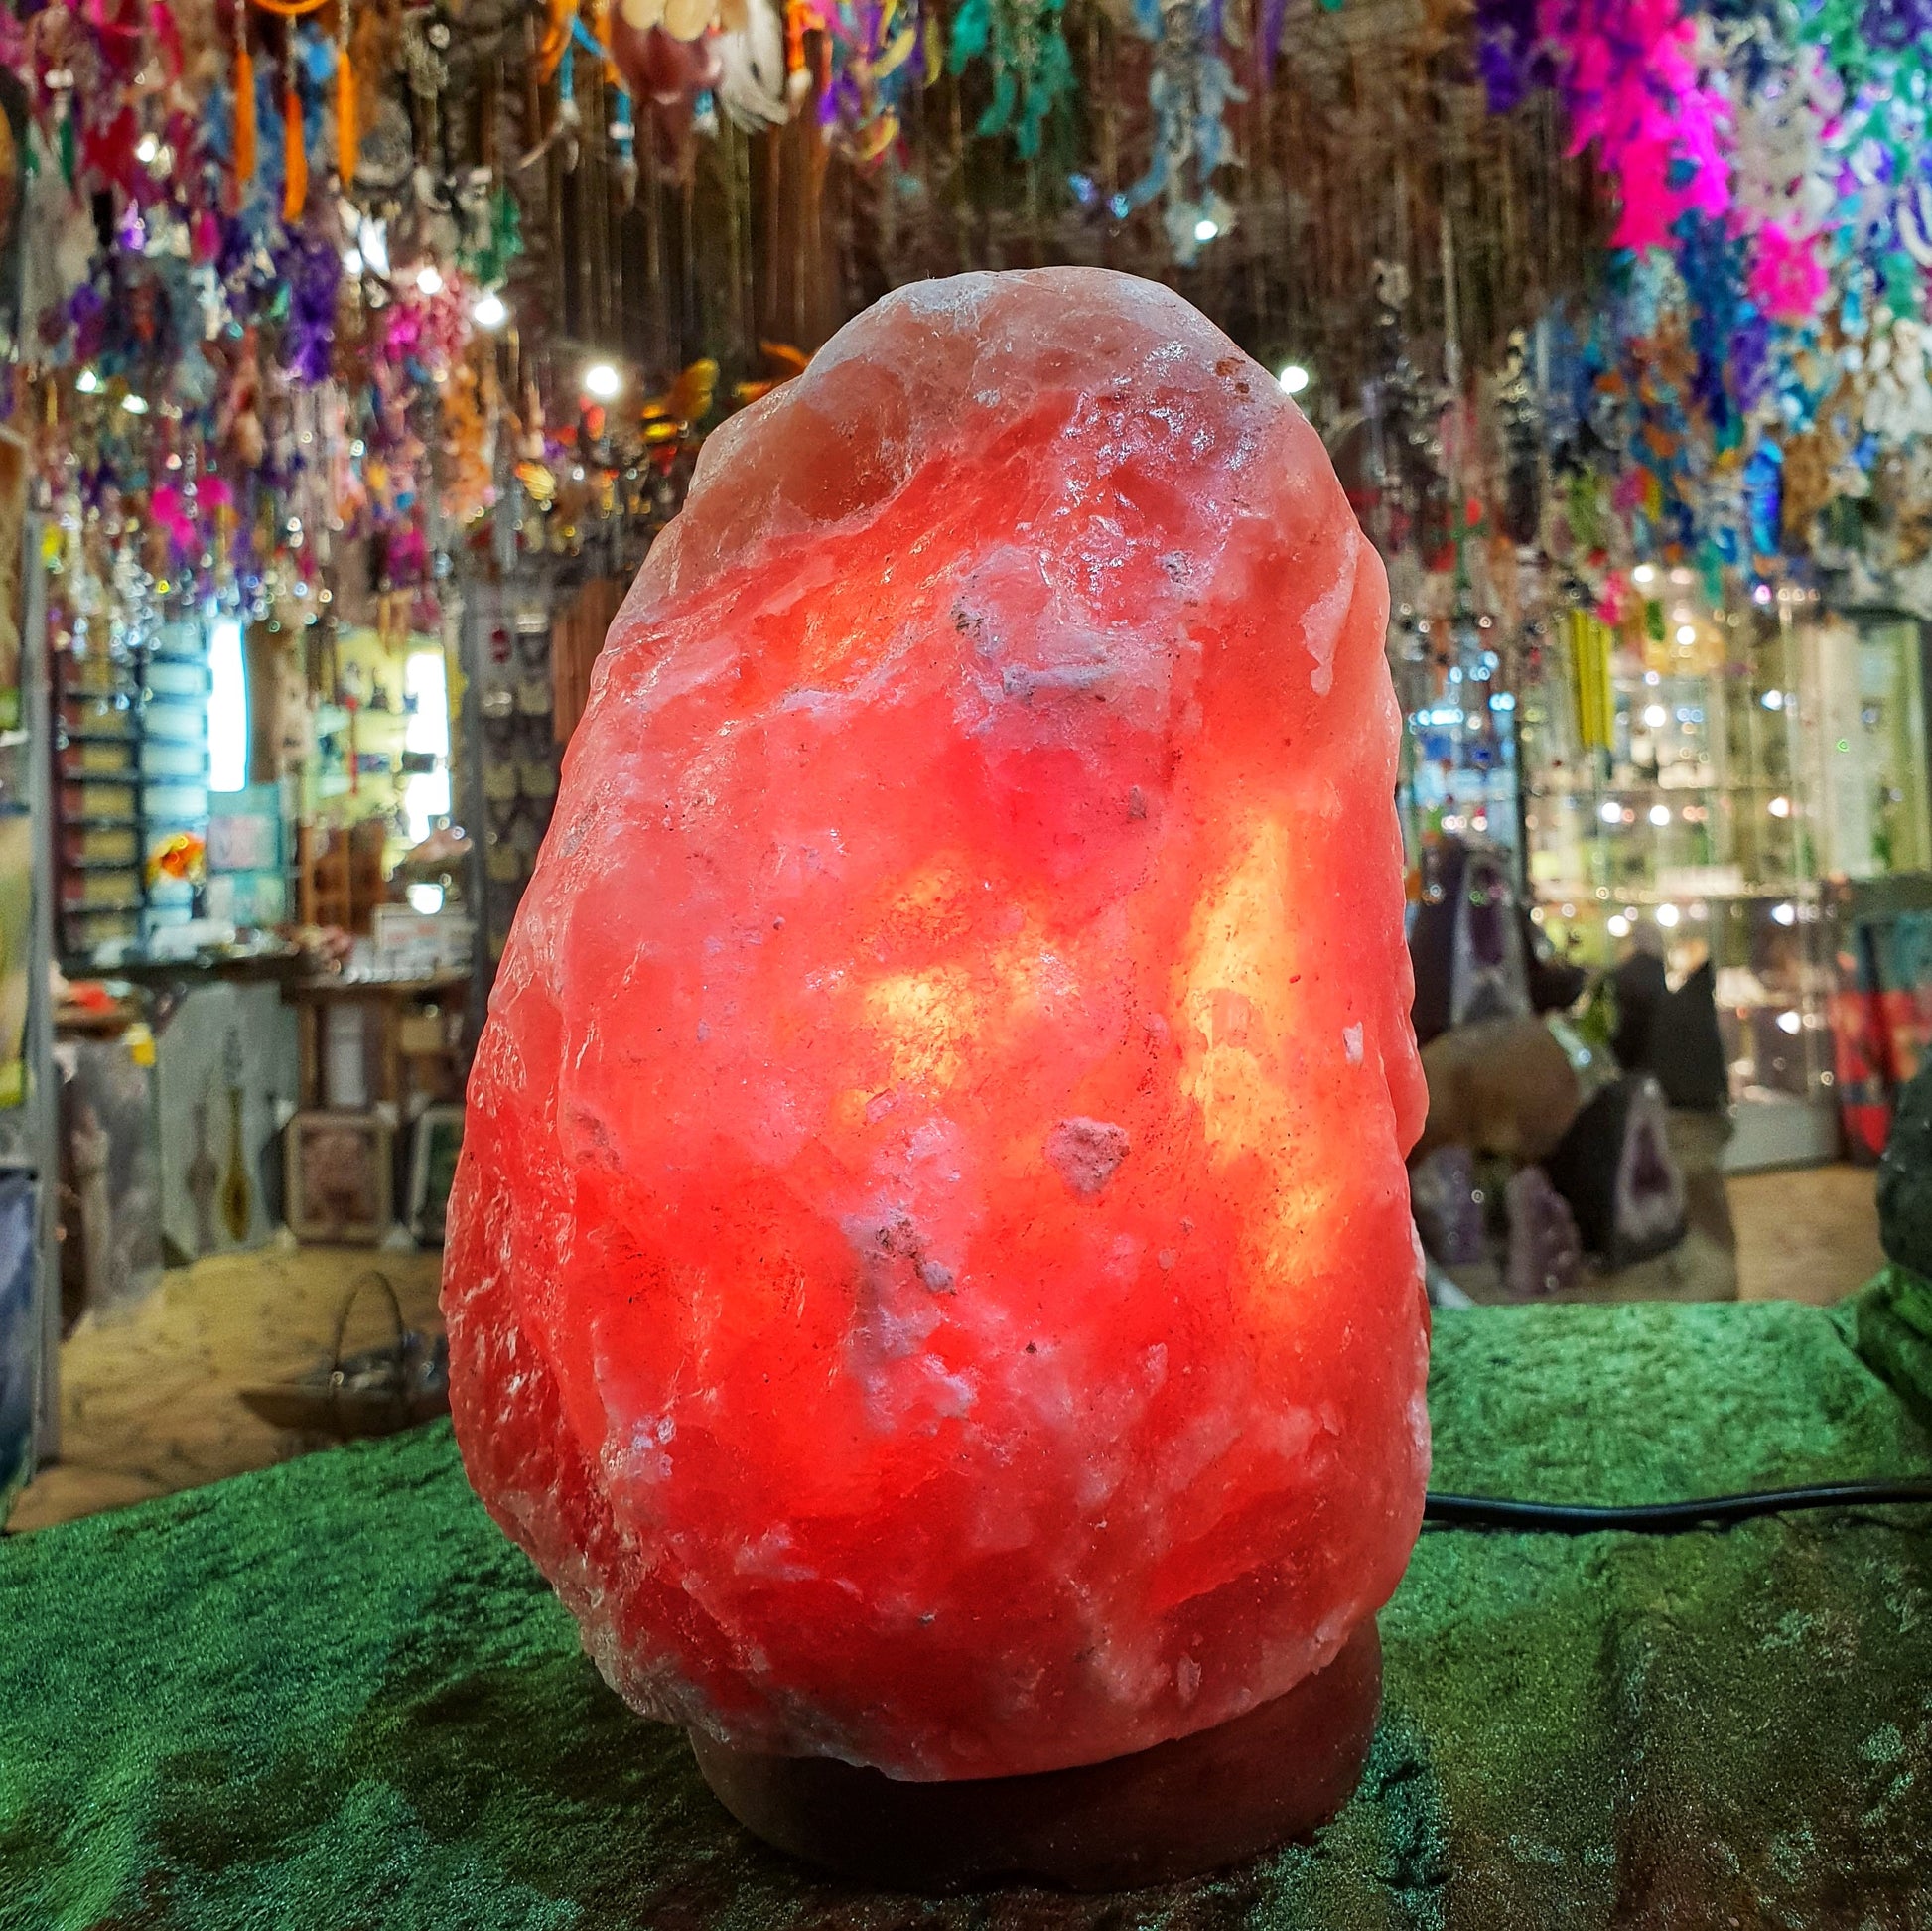 Himalayan Salt Lamps 1.5-2kg Range - Rivendell Shop